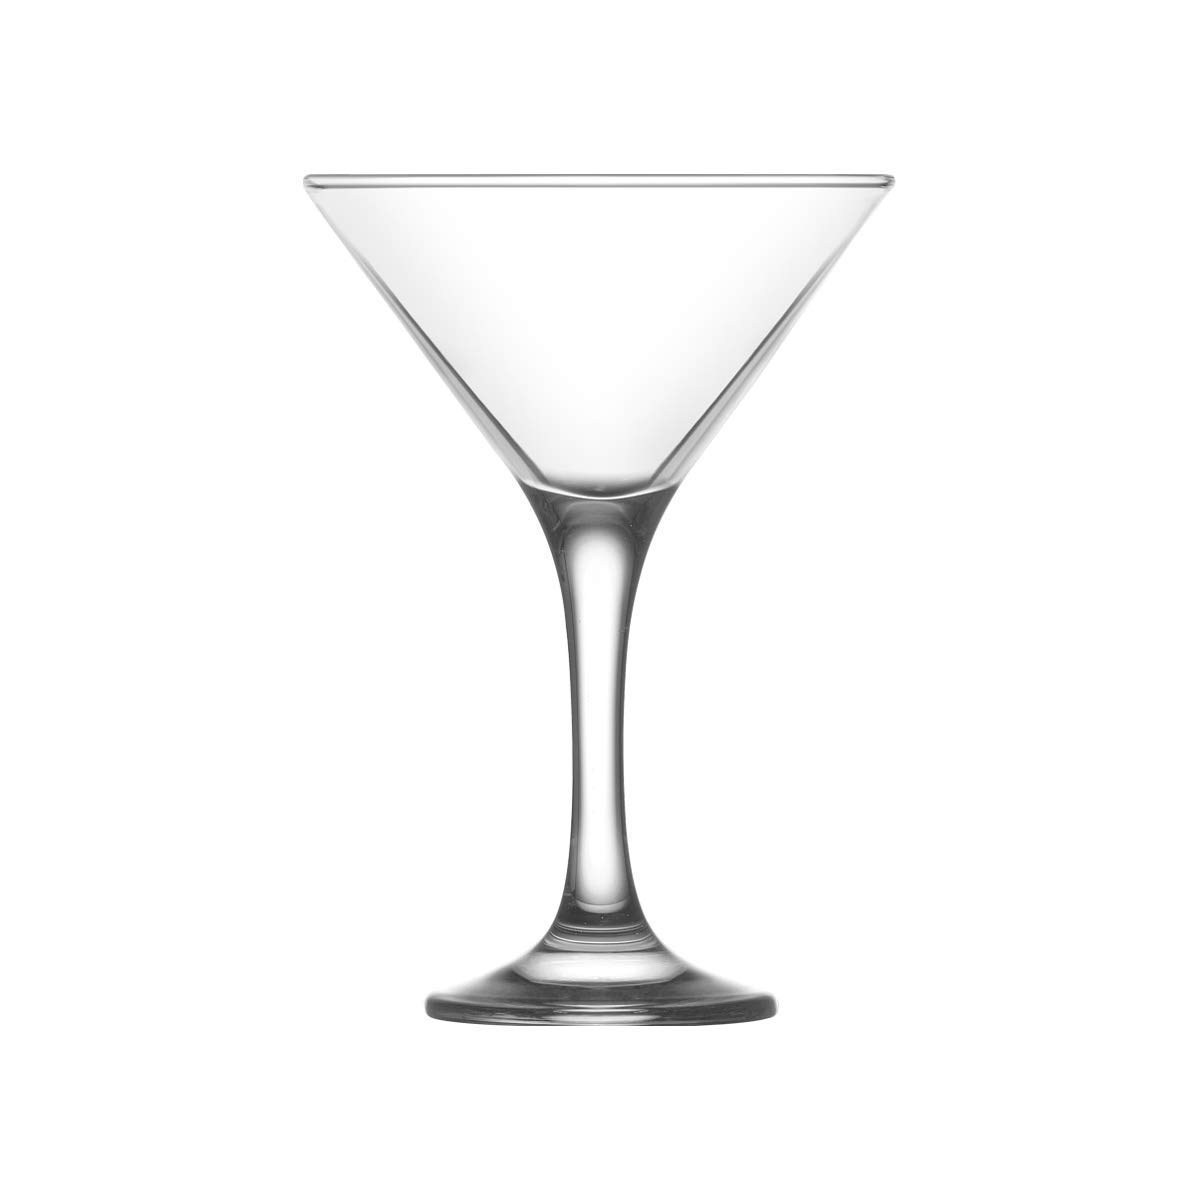 Gurallar MIS586 Misket Martini Glass 6 Oz, 5-13/16" High, Case of 24